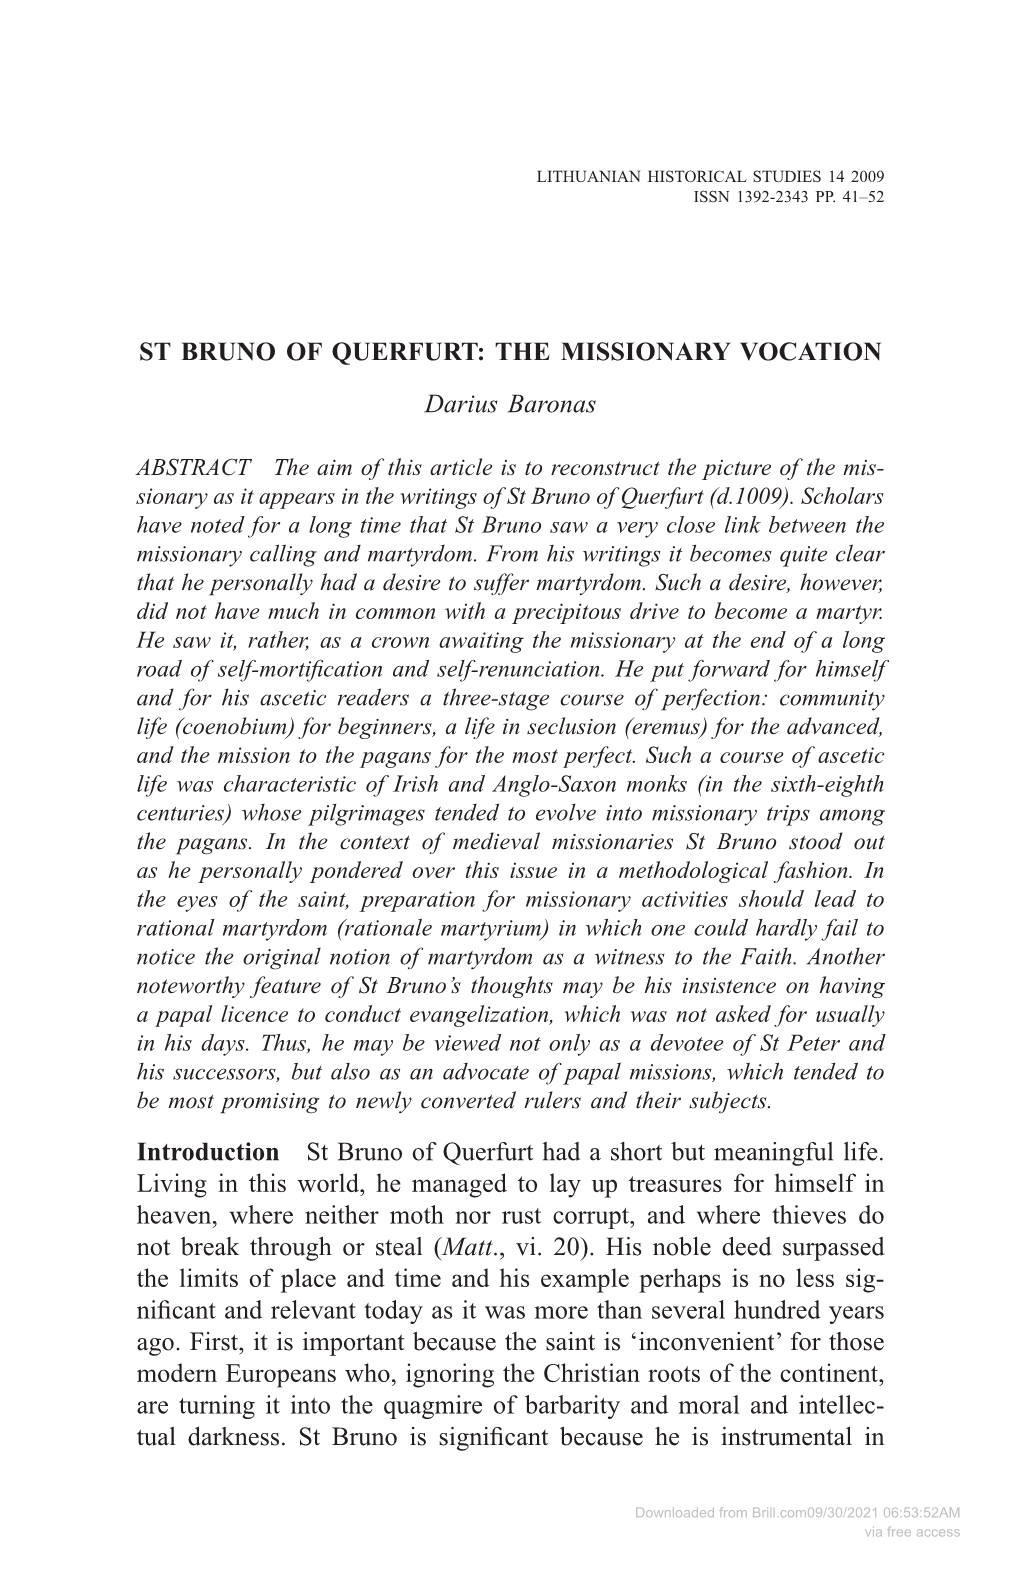 ST BRUNO of QUERFURT: the MISSIONARY VOCATION Darius Baronas